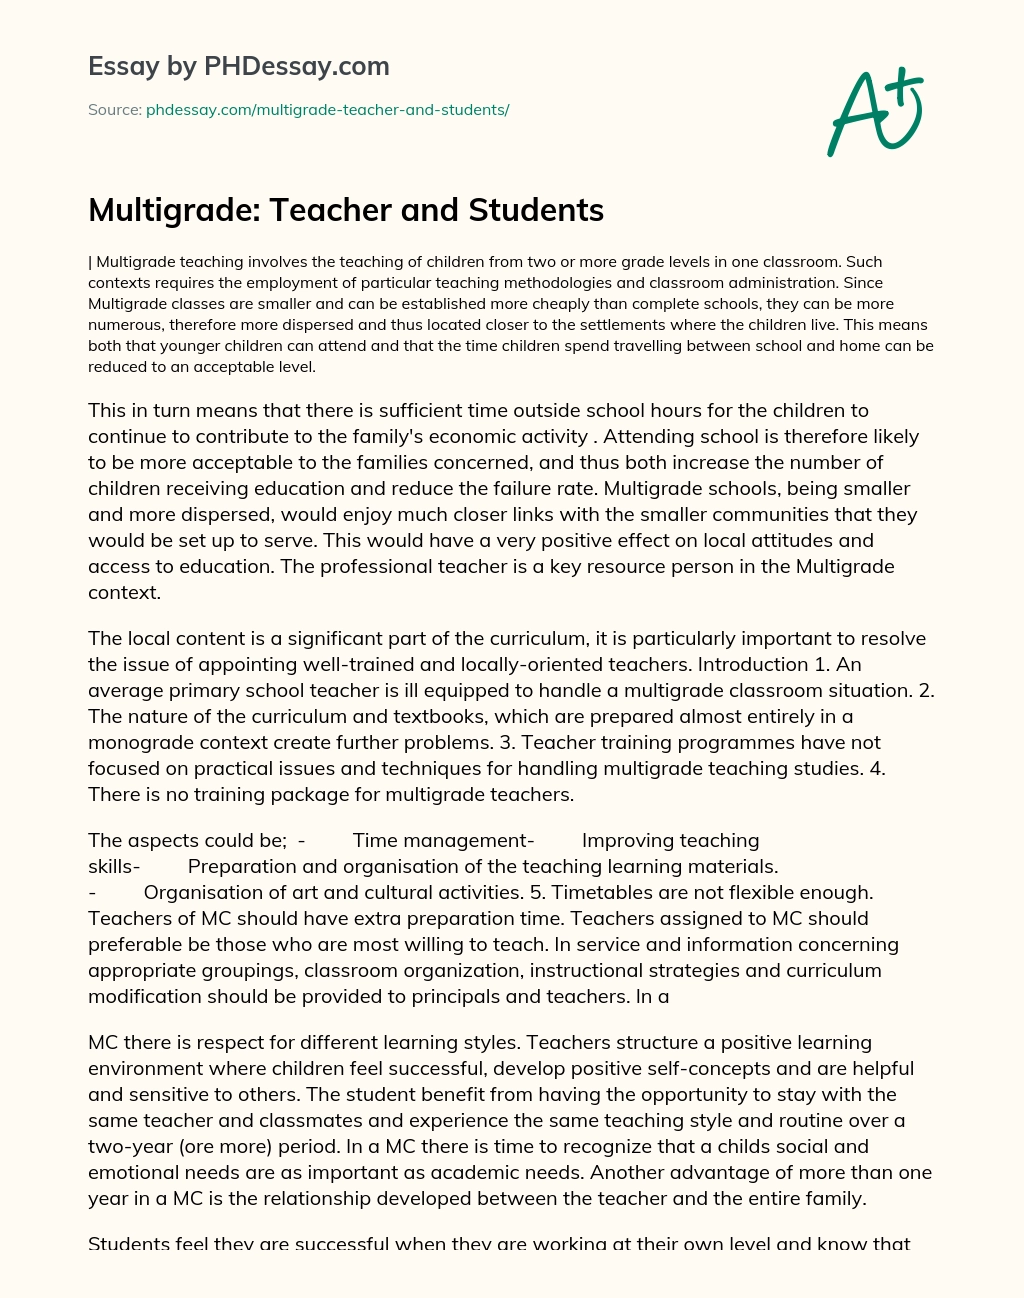 Multigrade: Teacher and Students essay